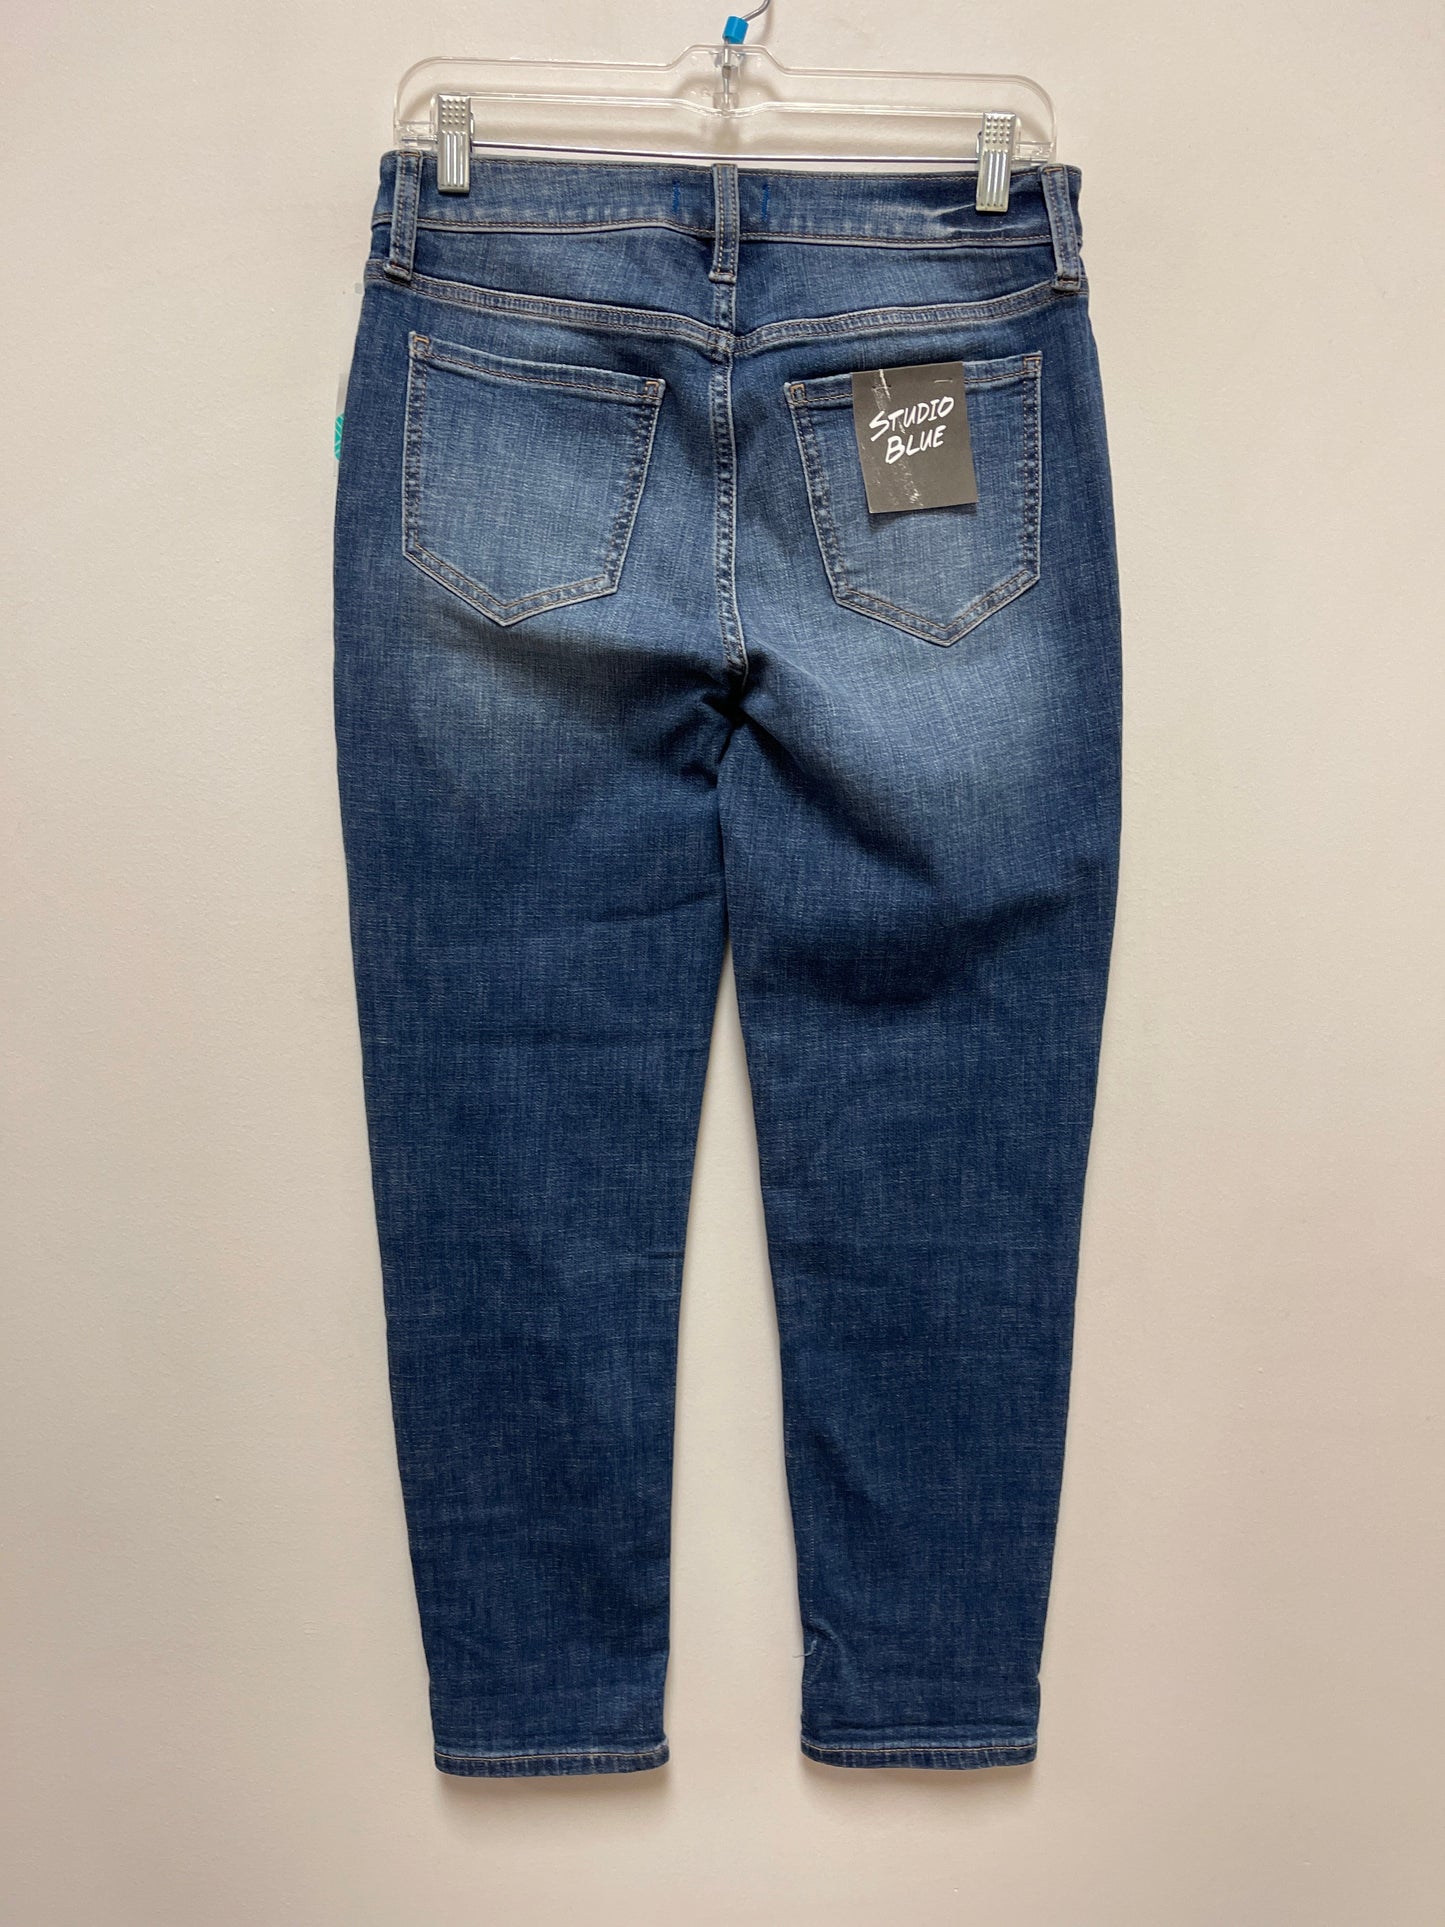 Blue Denim Jeans Skinny Clothes Mentor, Size 8